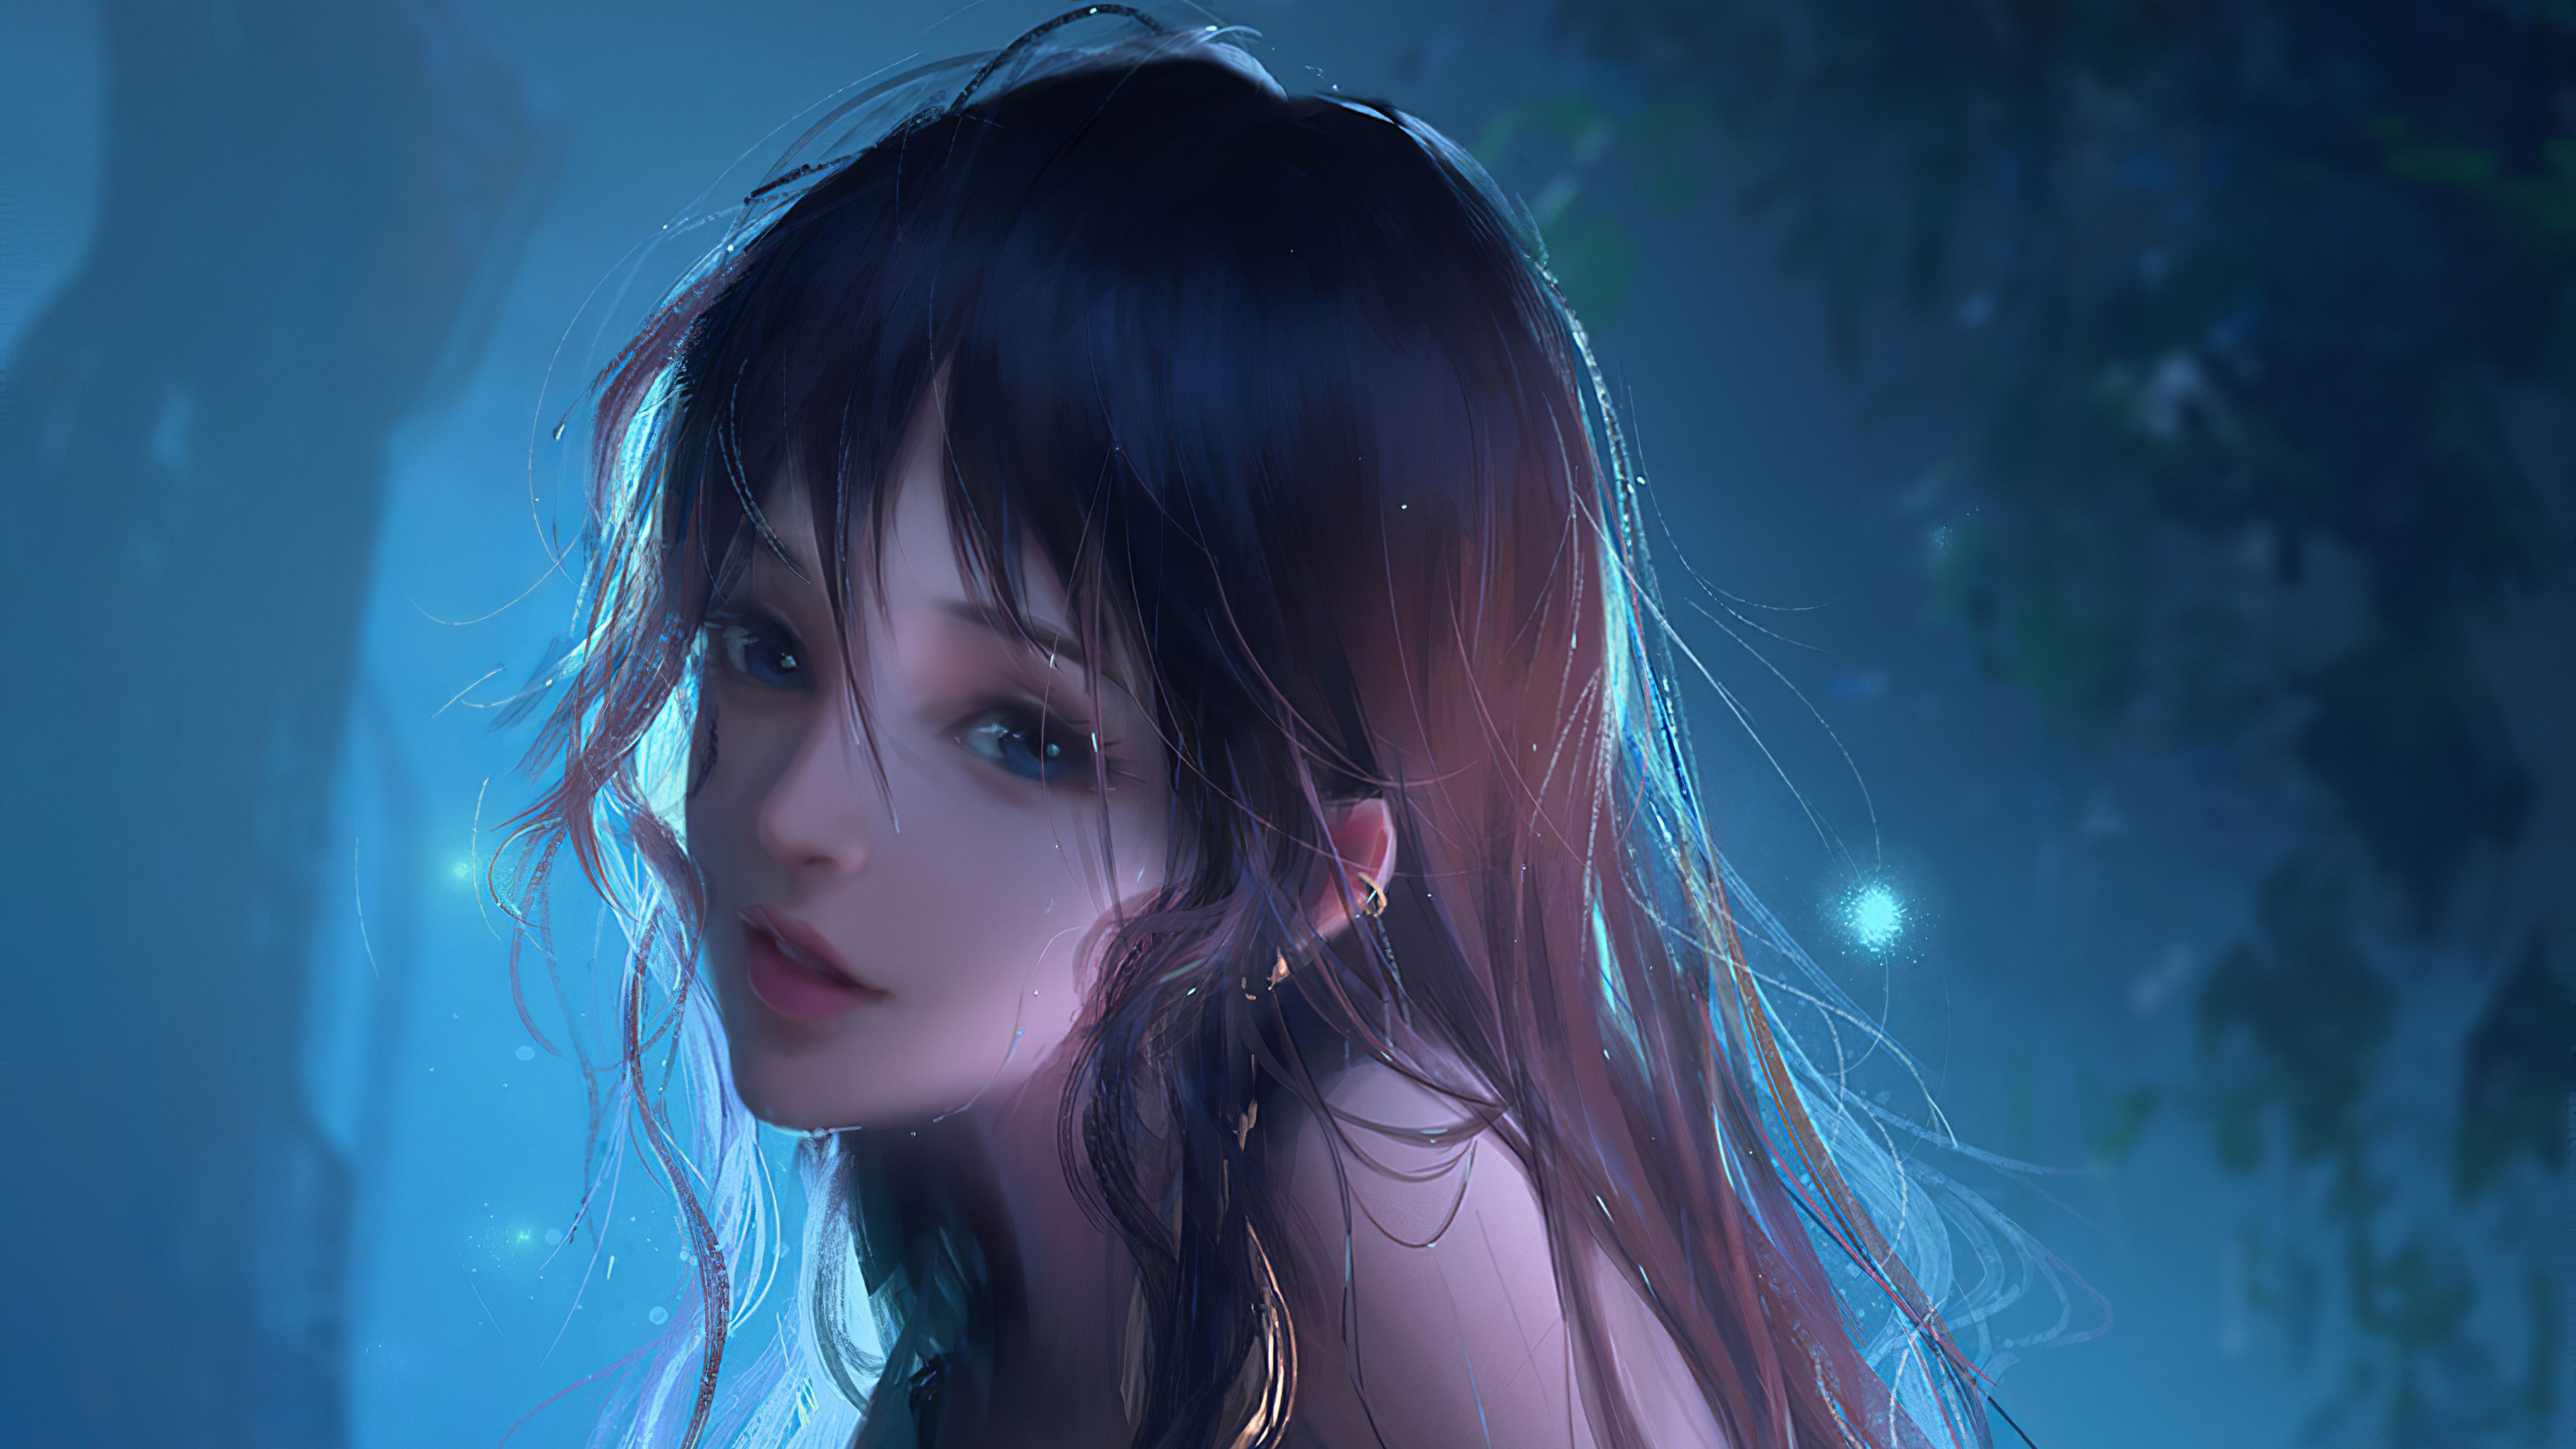 Pretty Blue Eye Girl 4k, HD Artist, 4k Wallpaper, Image